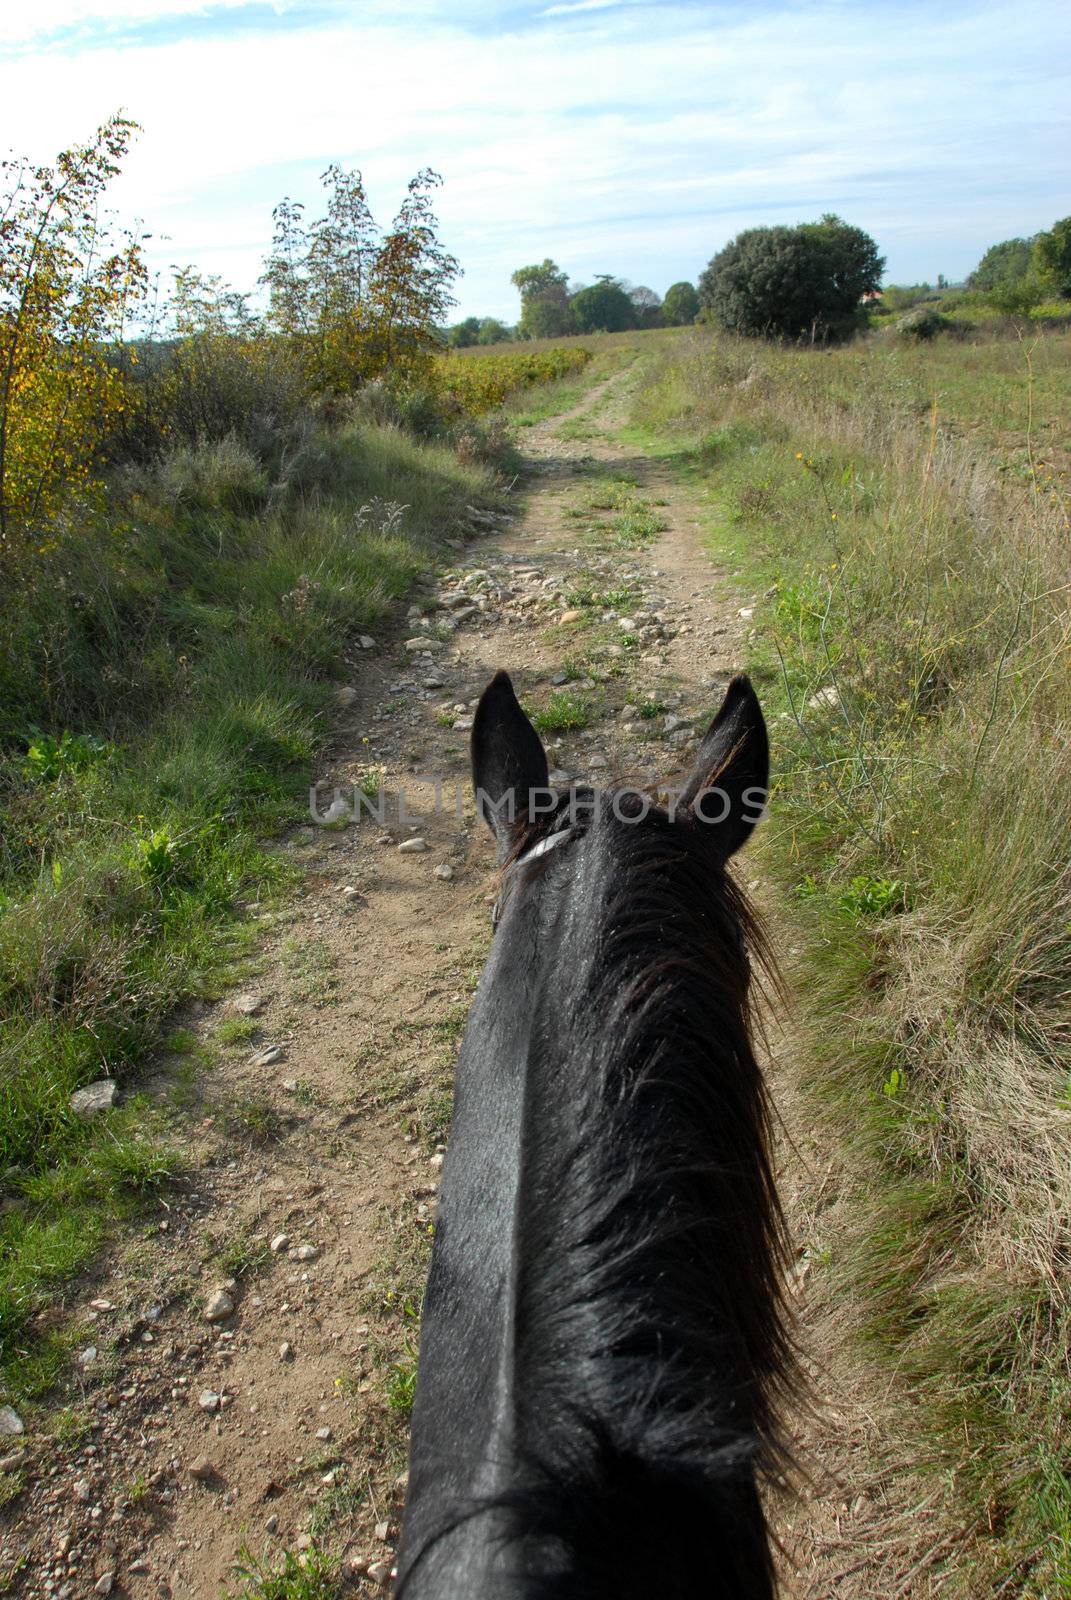 horseback riding on a black stallion on a rural way

